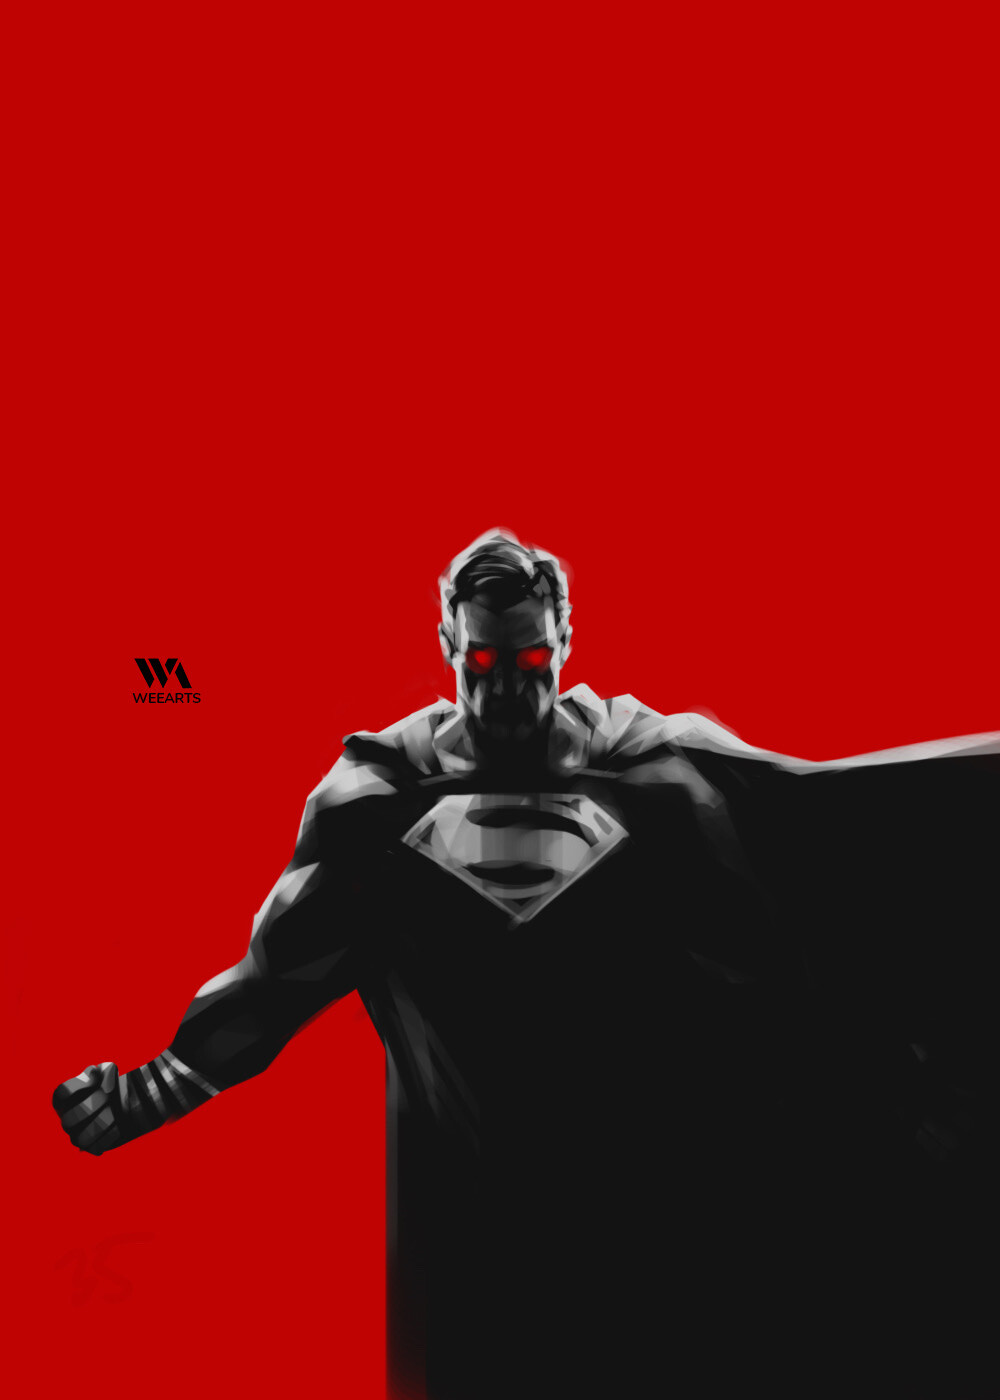 ArtStation - Superman (Black suit) - Red series background